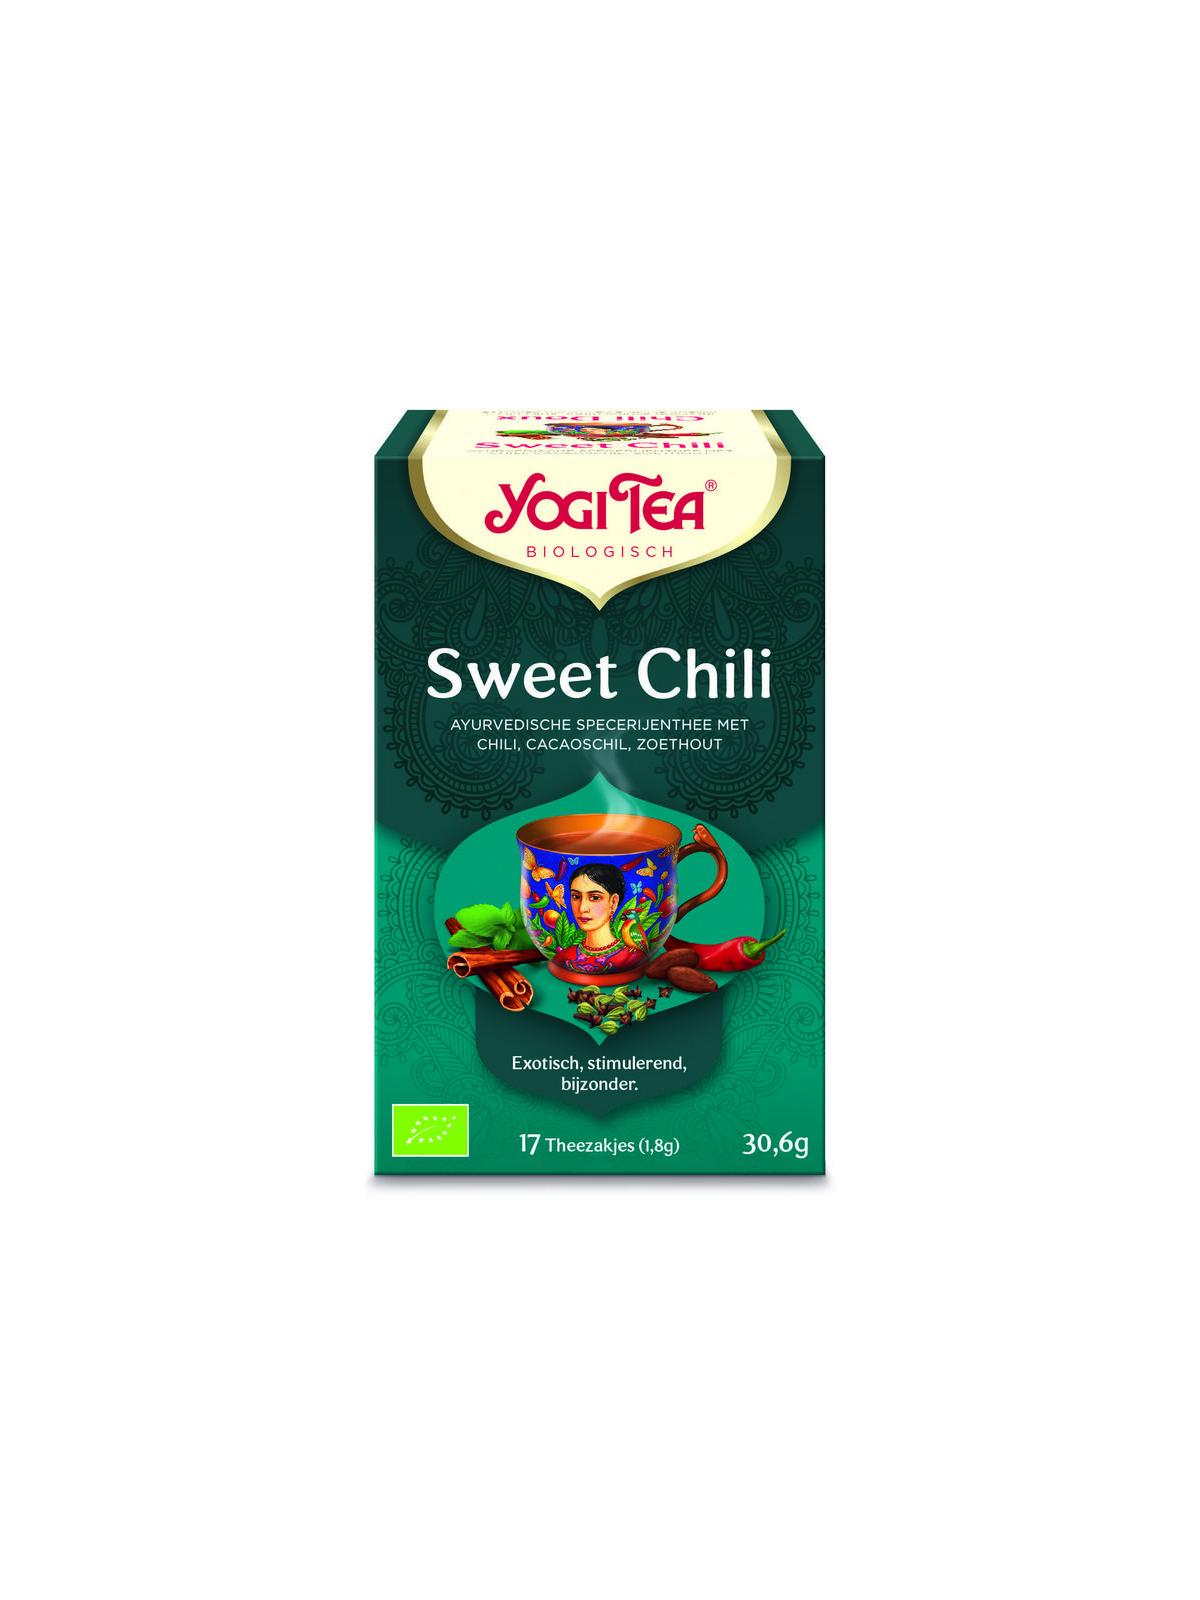 Sweet chili bio